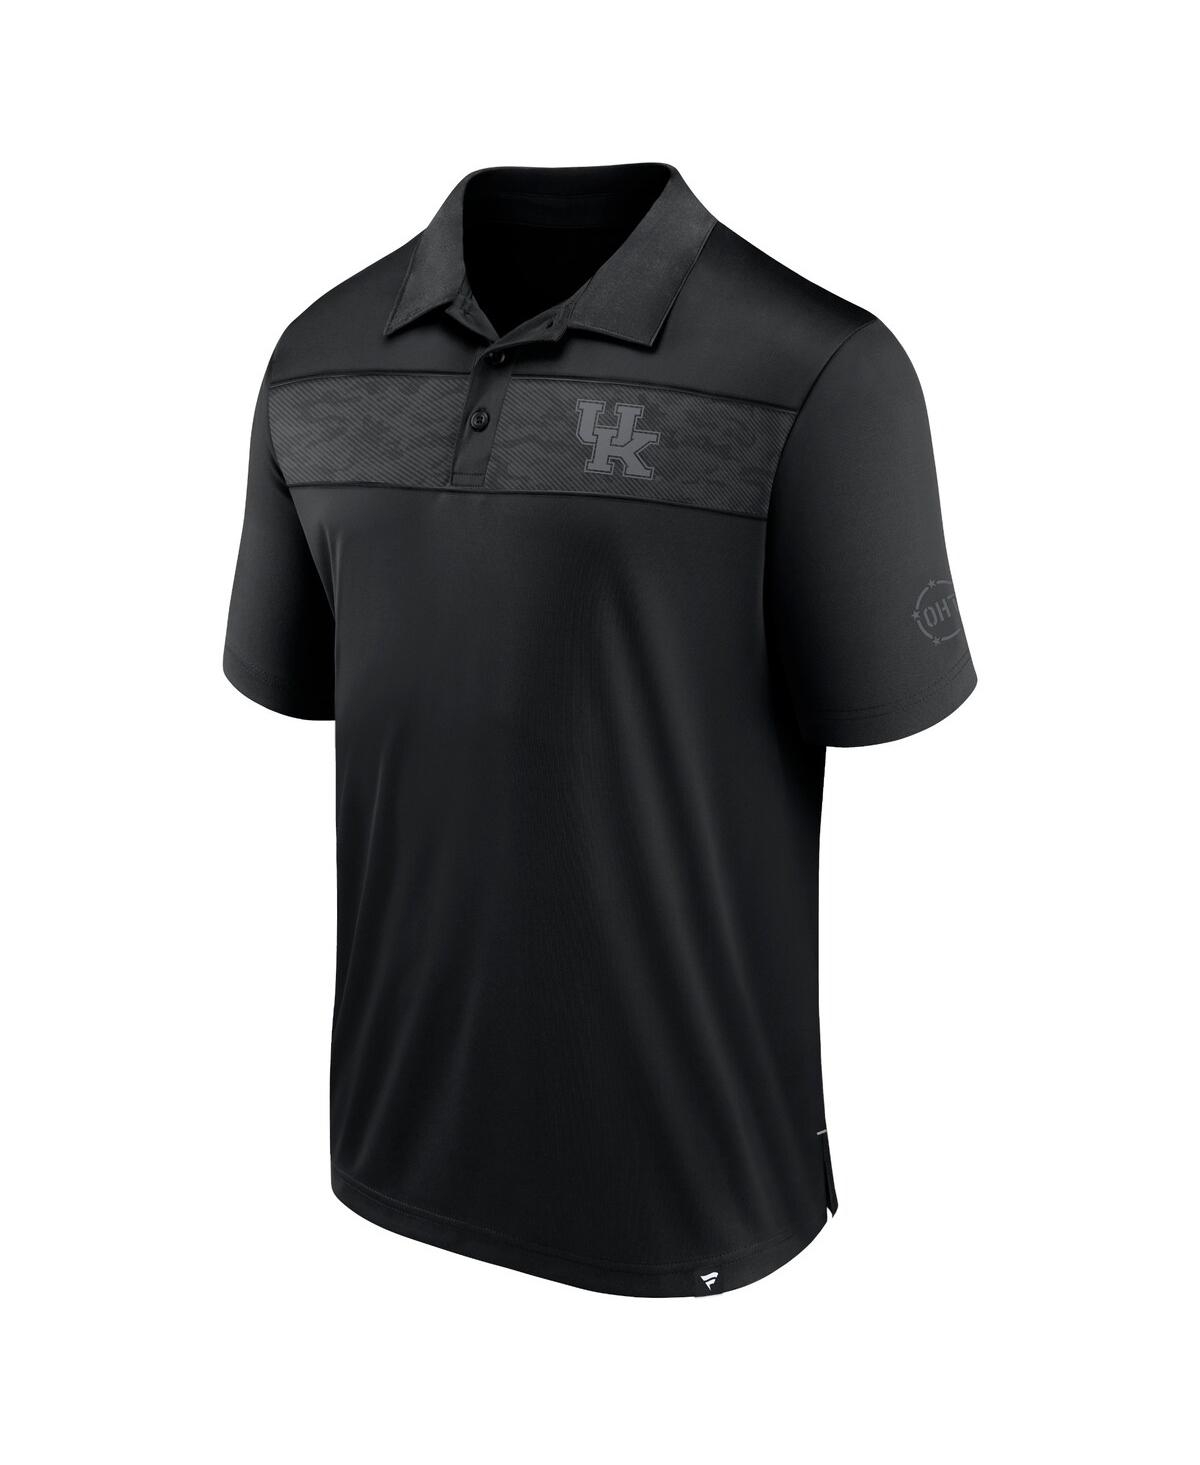 Shop Fanatics Men's  Black Kentucky Wildcats Oht Military-inspired Appreciation Polo Shirt